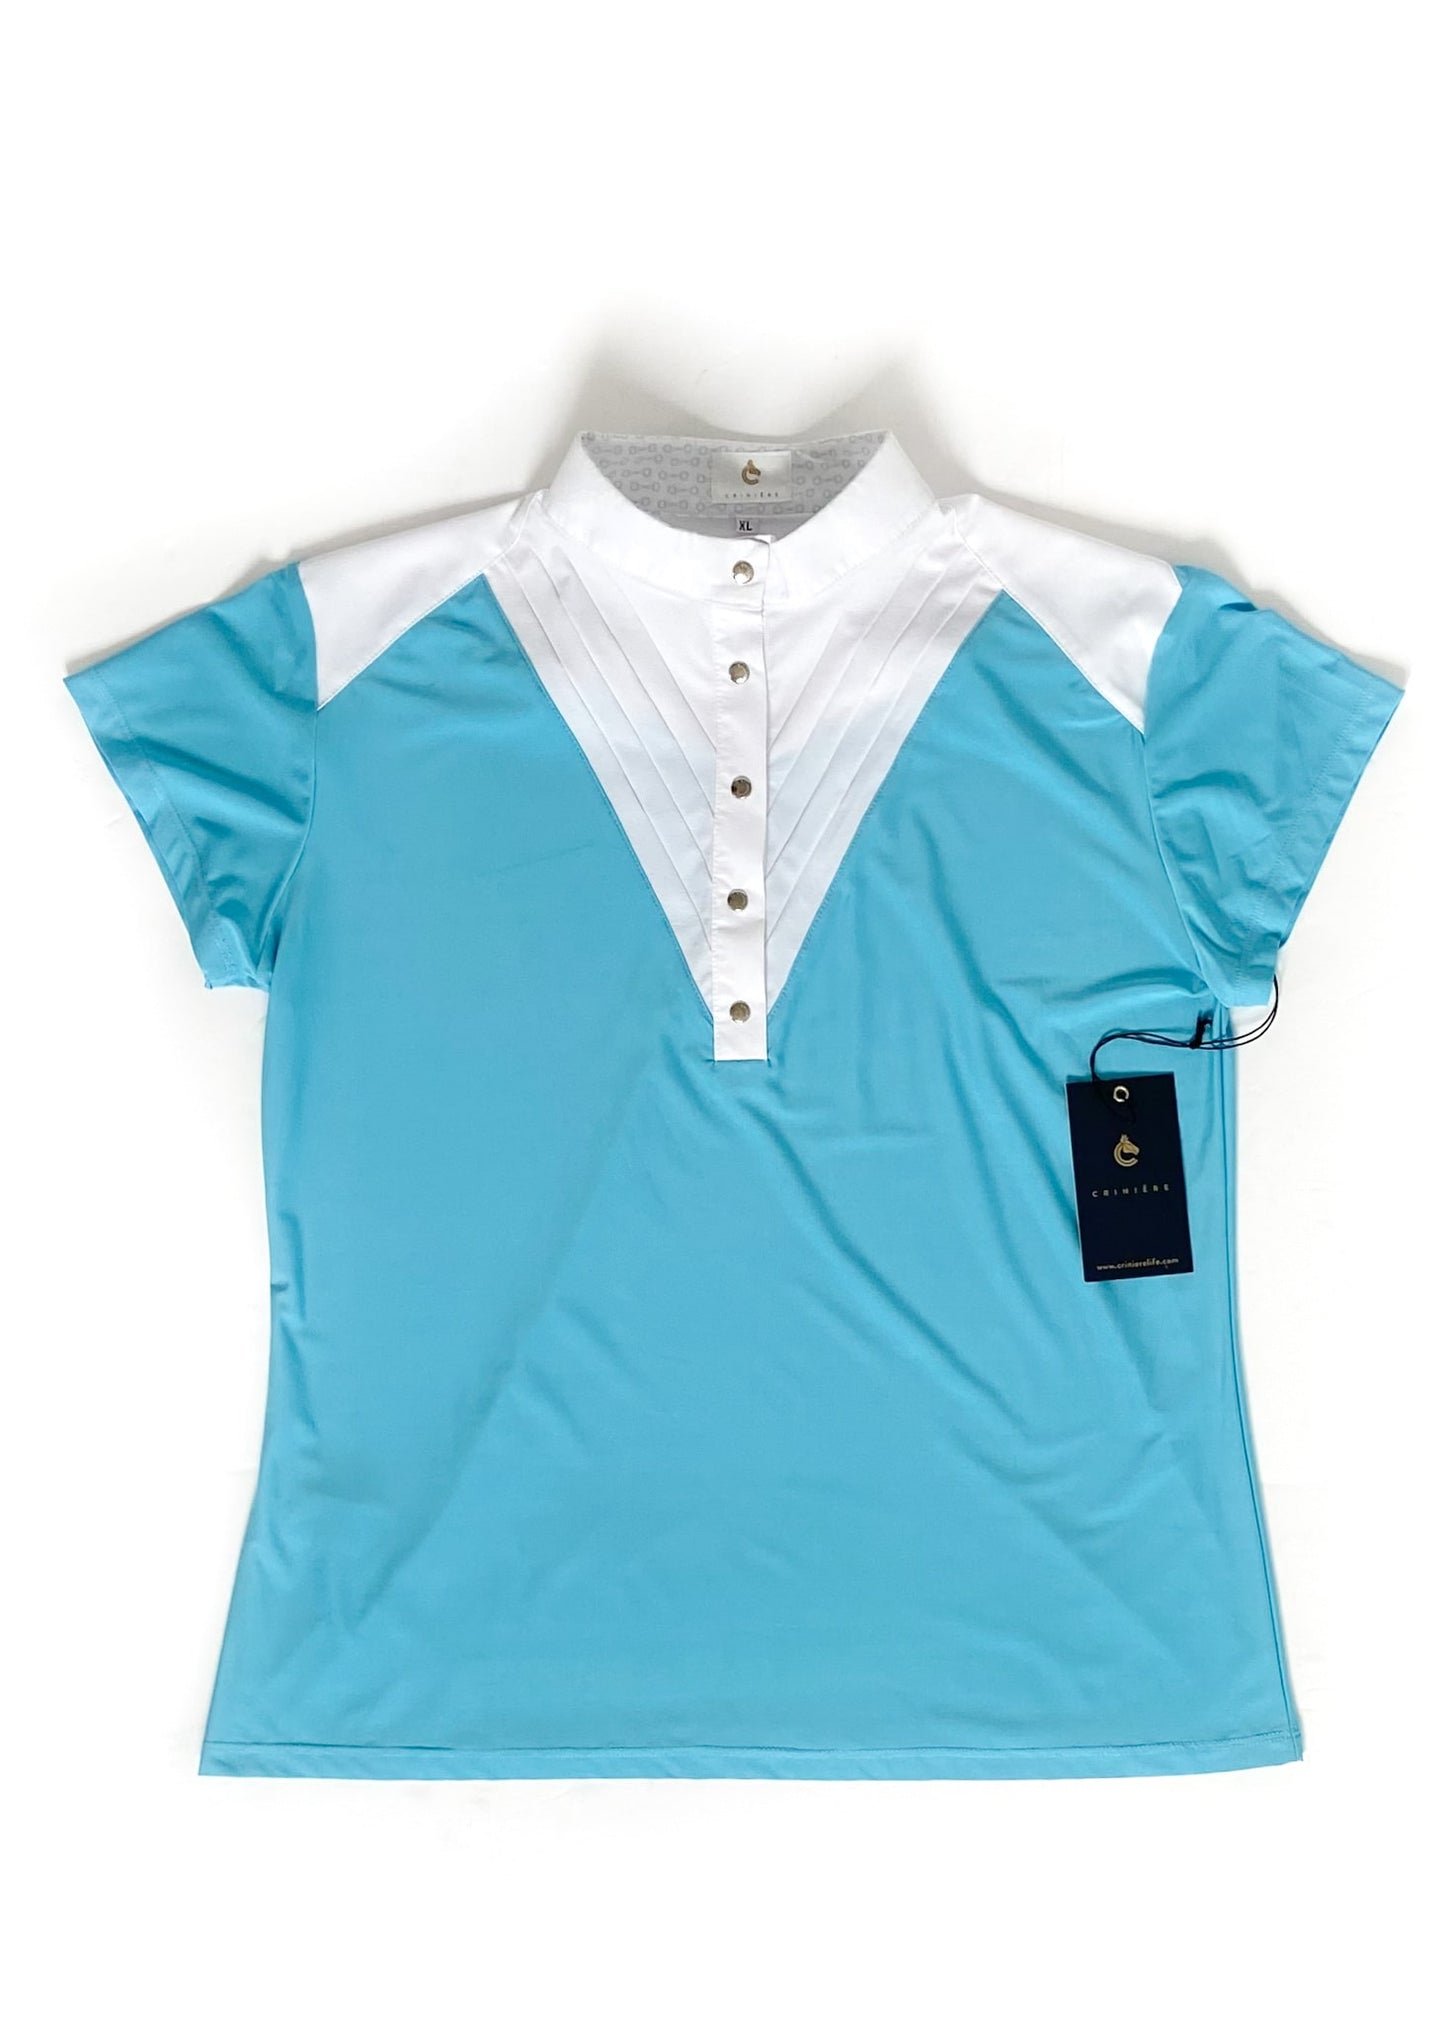 Criniere Margot Show Shirt - Baby Blue - XL